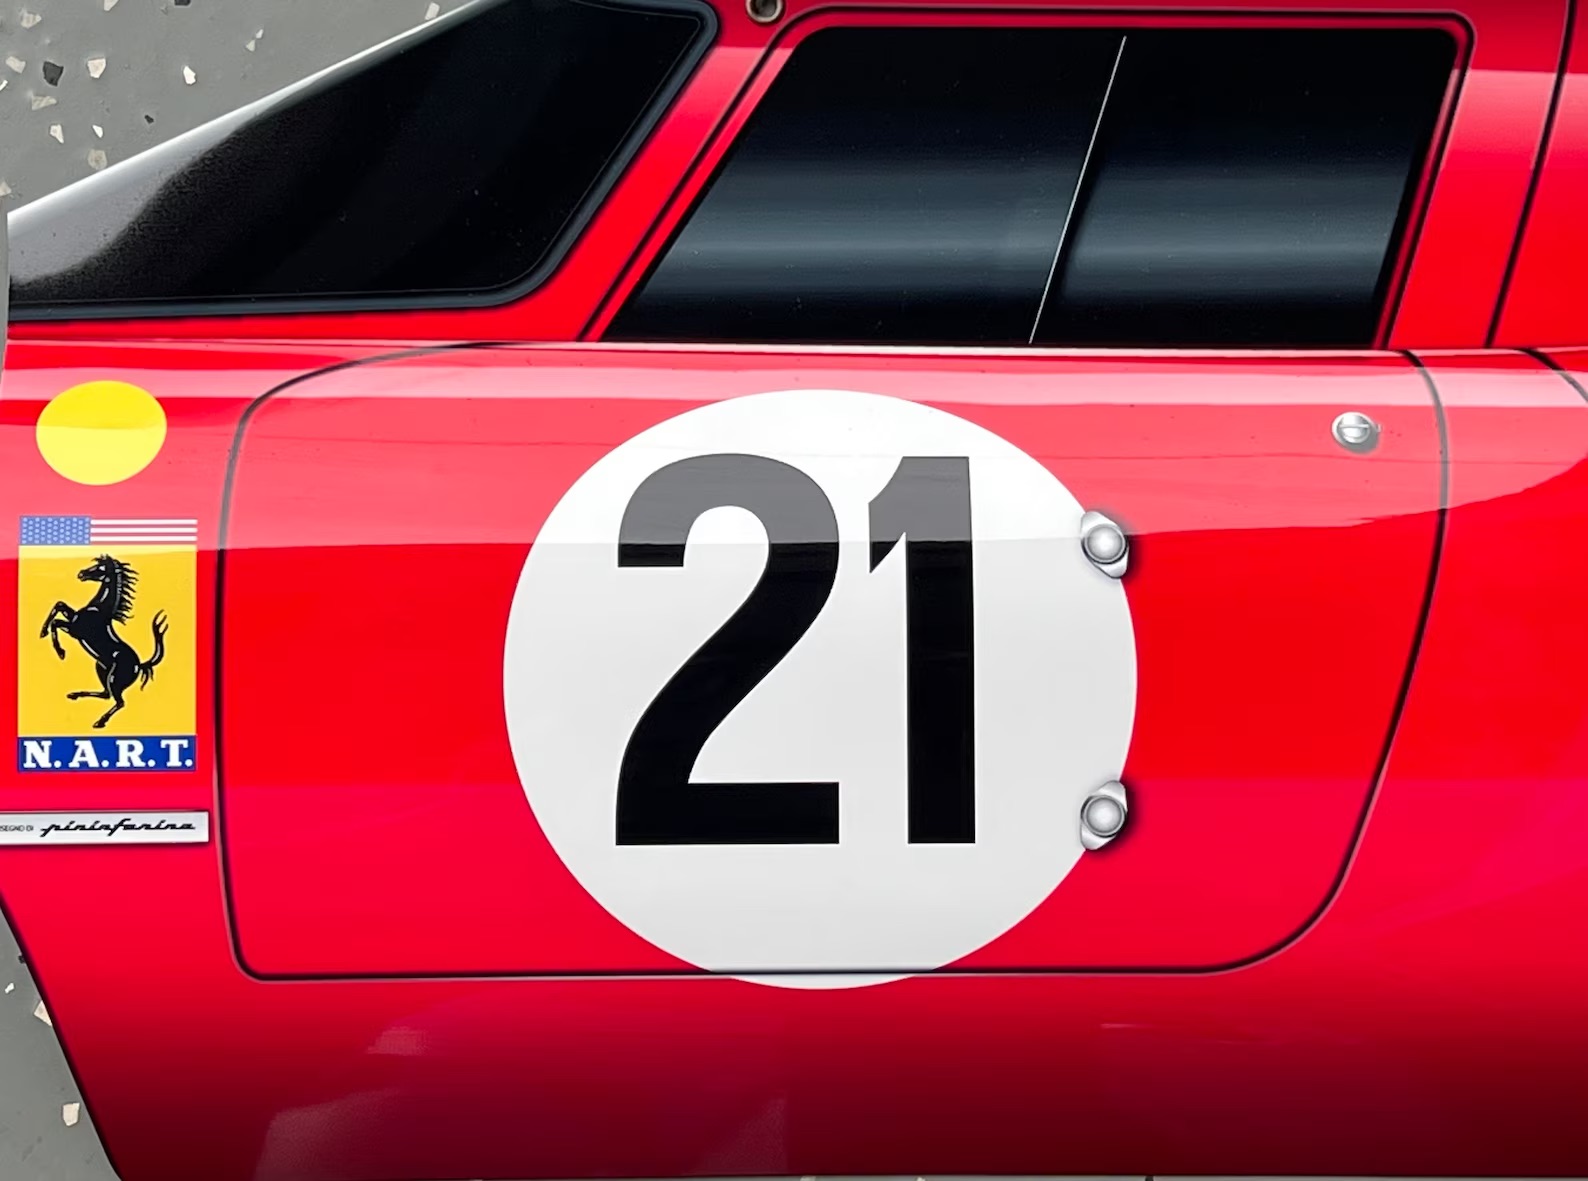 Ferrari 250LM Wall Display - Image 4 of 5